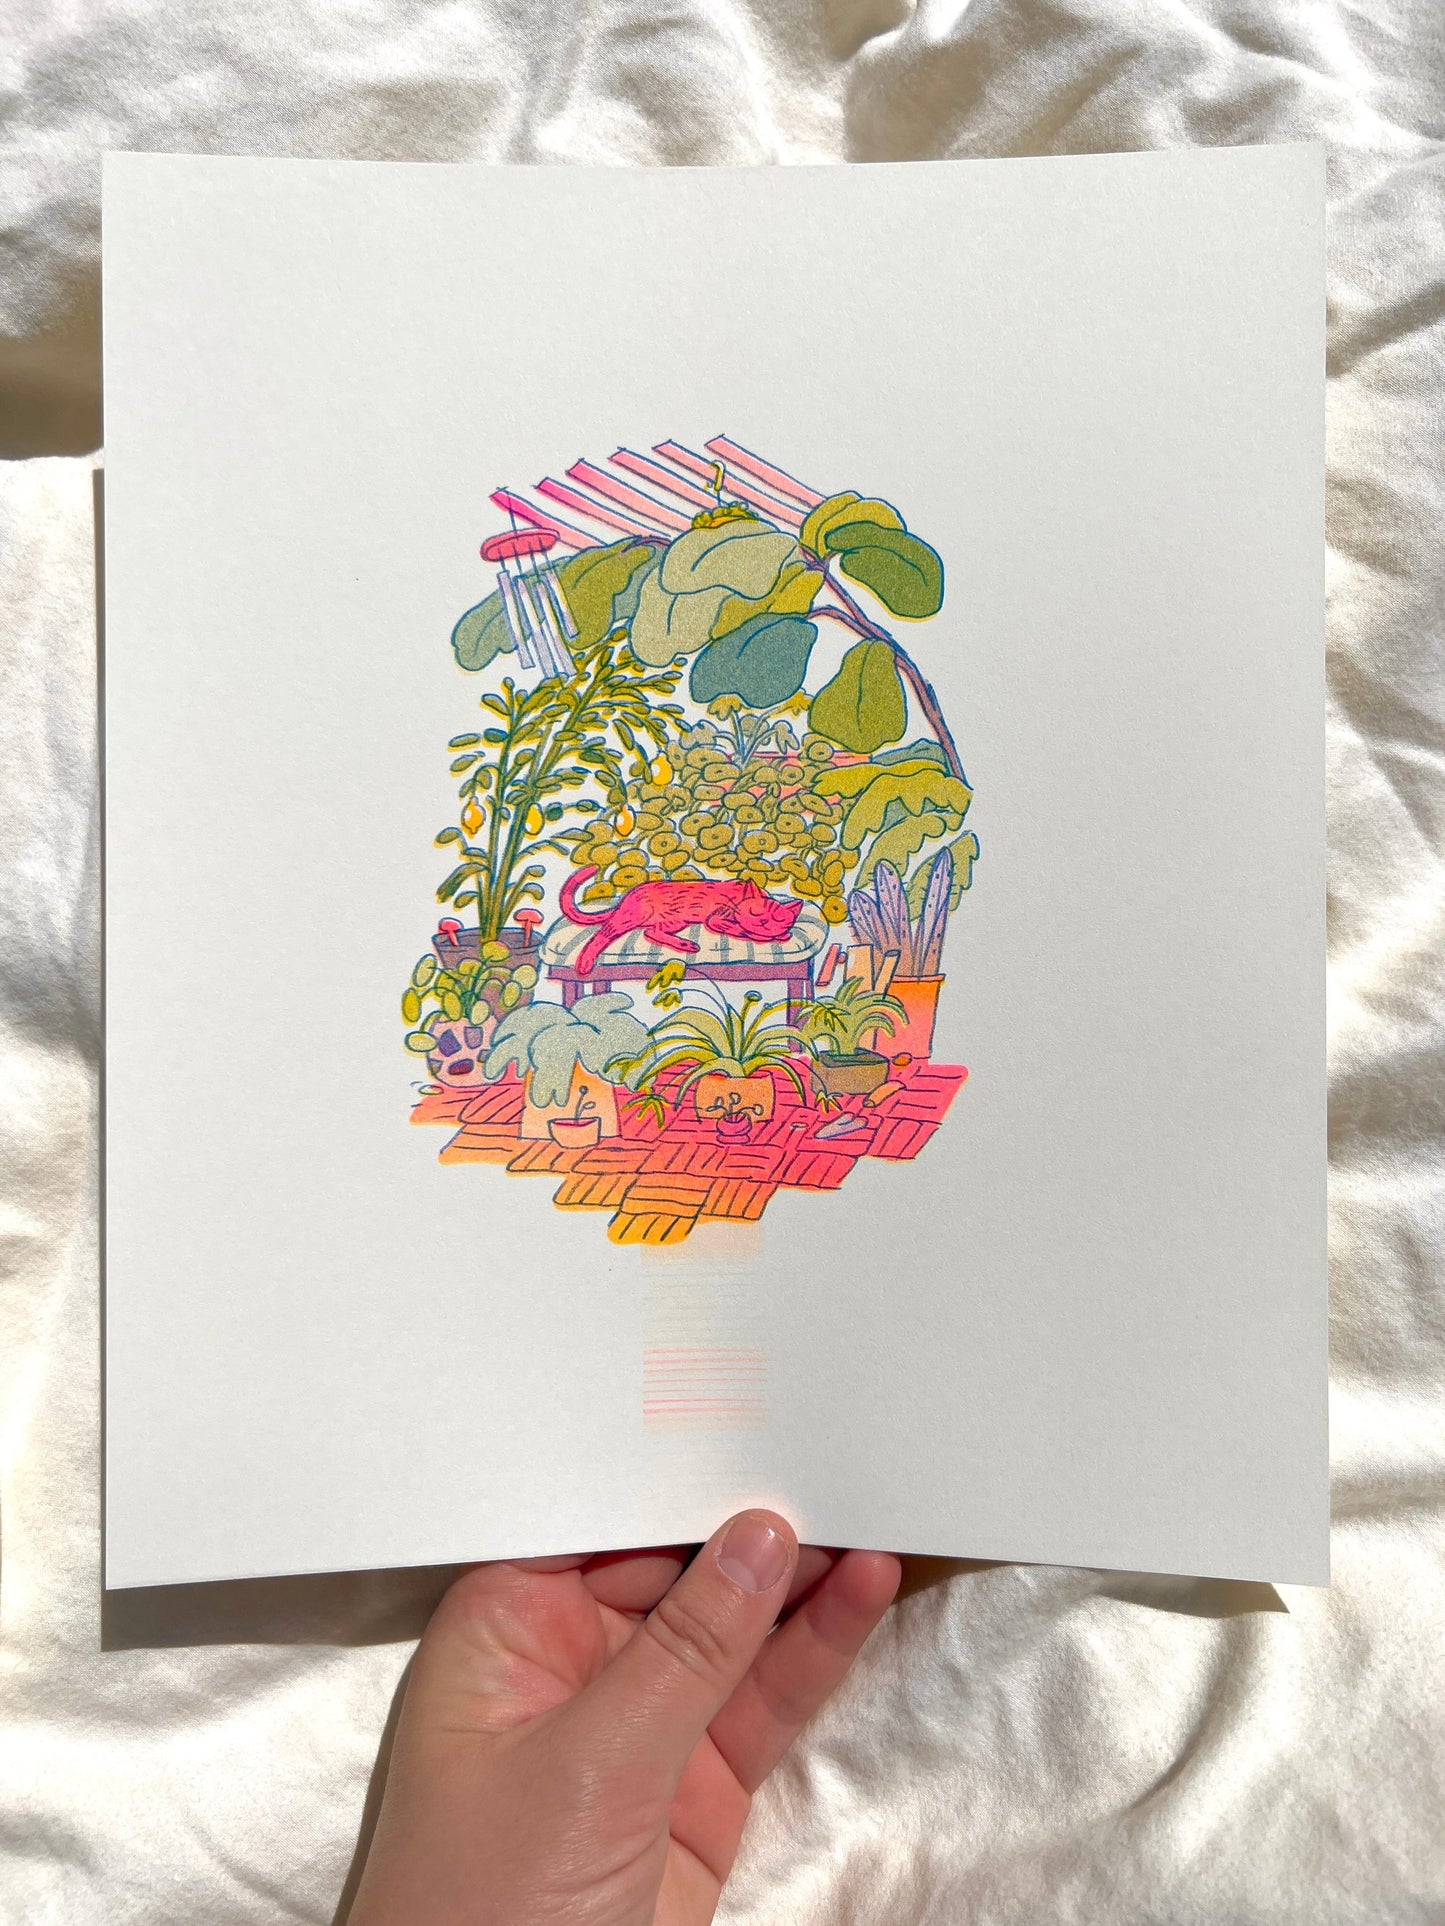 Natalie Andrewson: Medium Prints